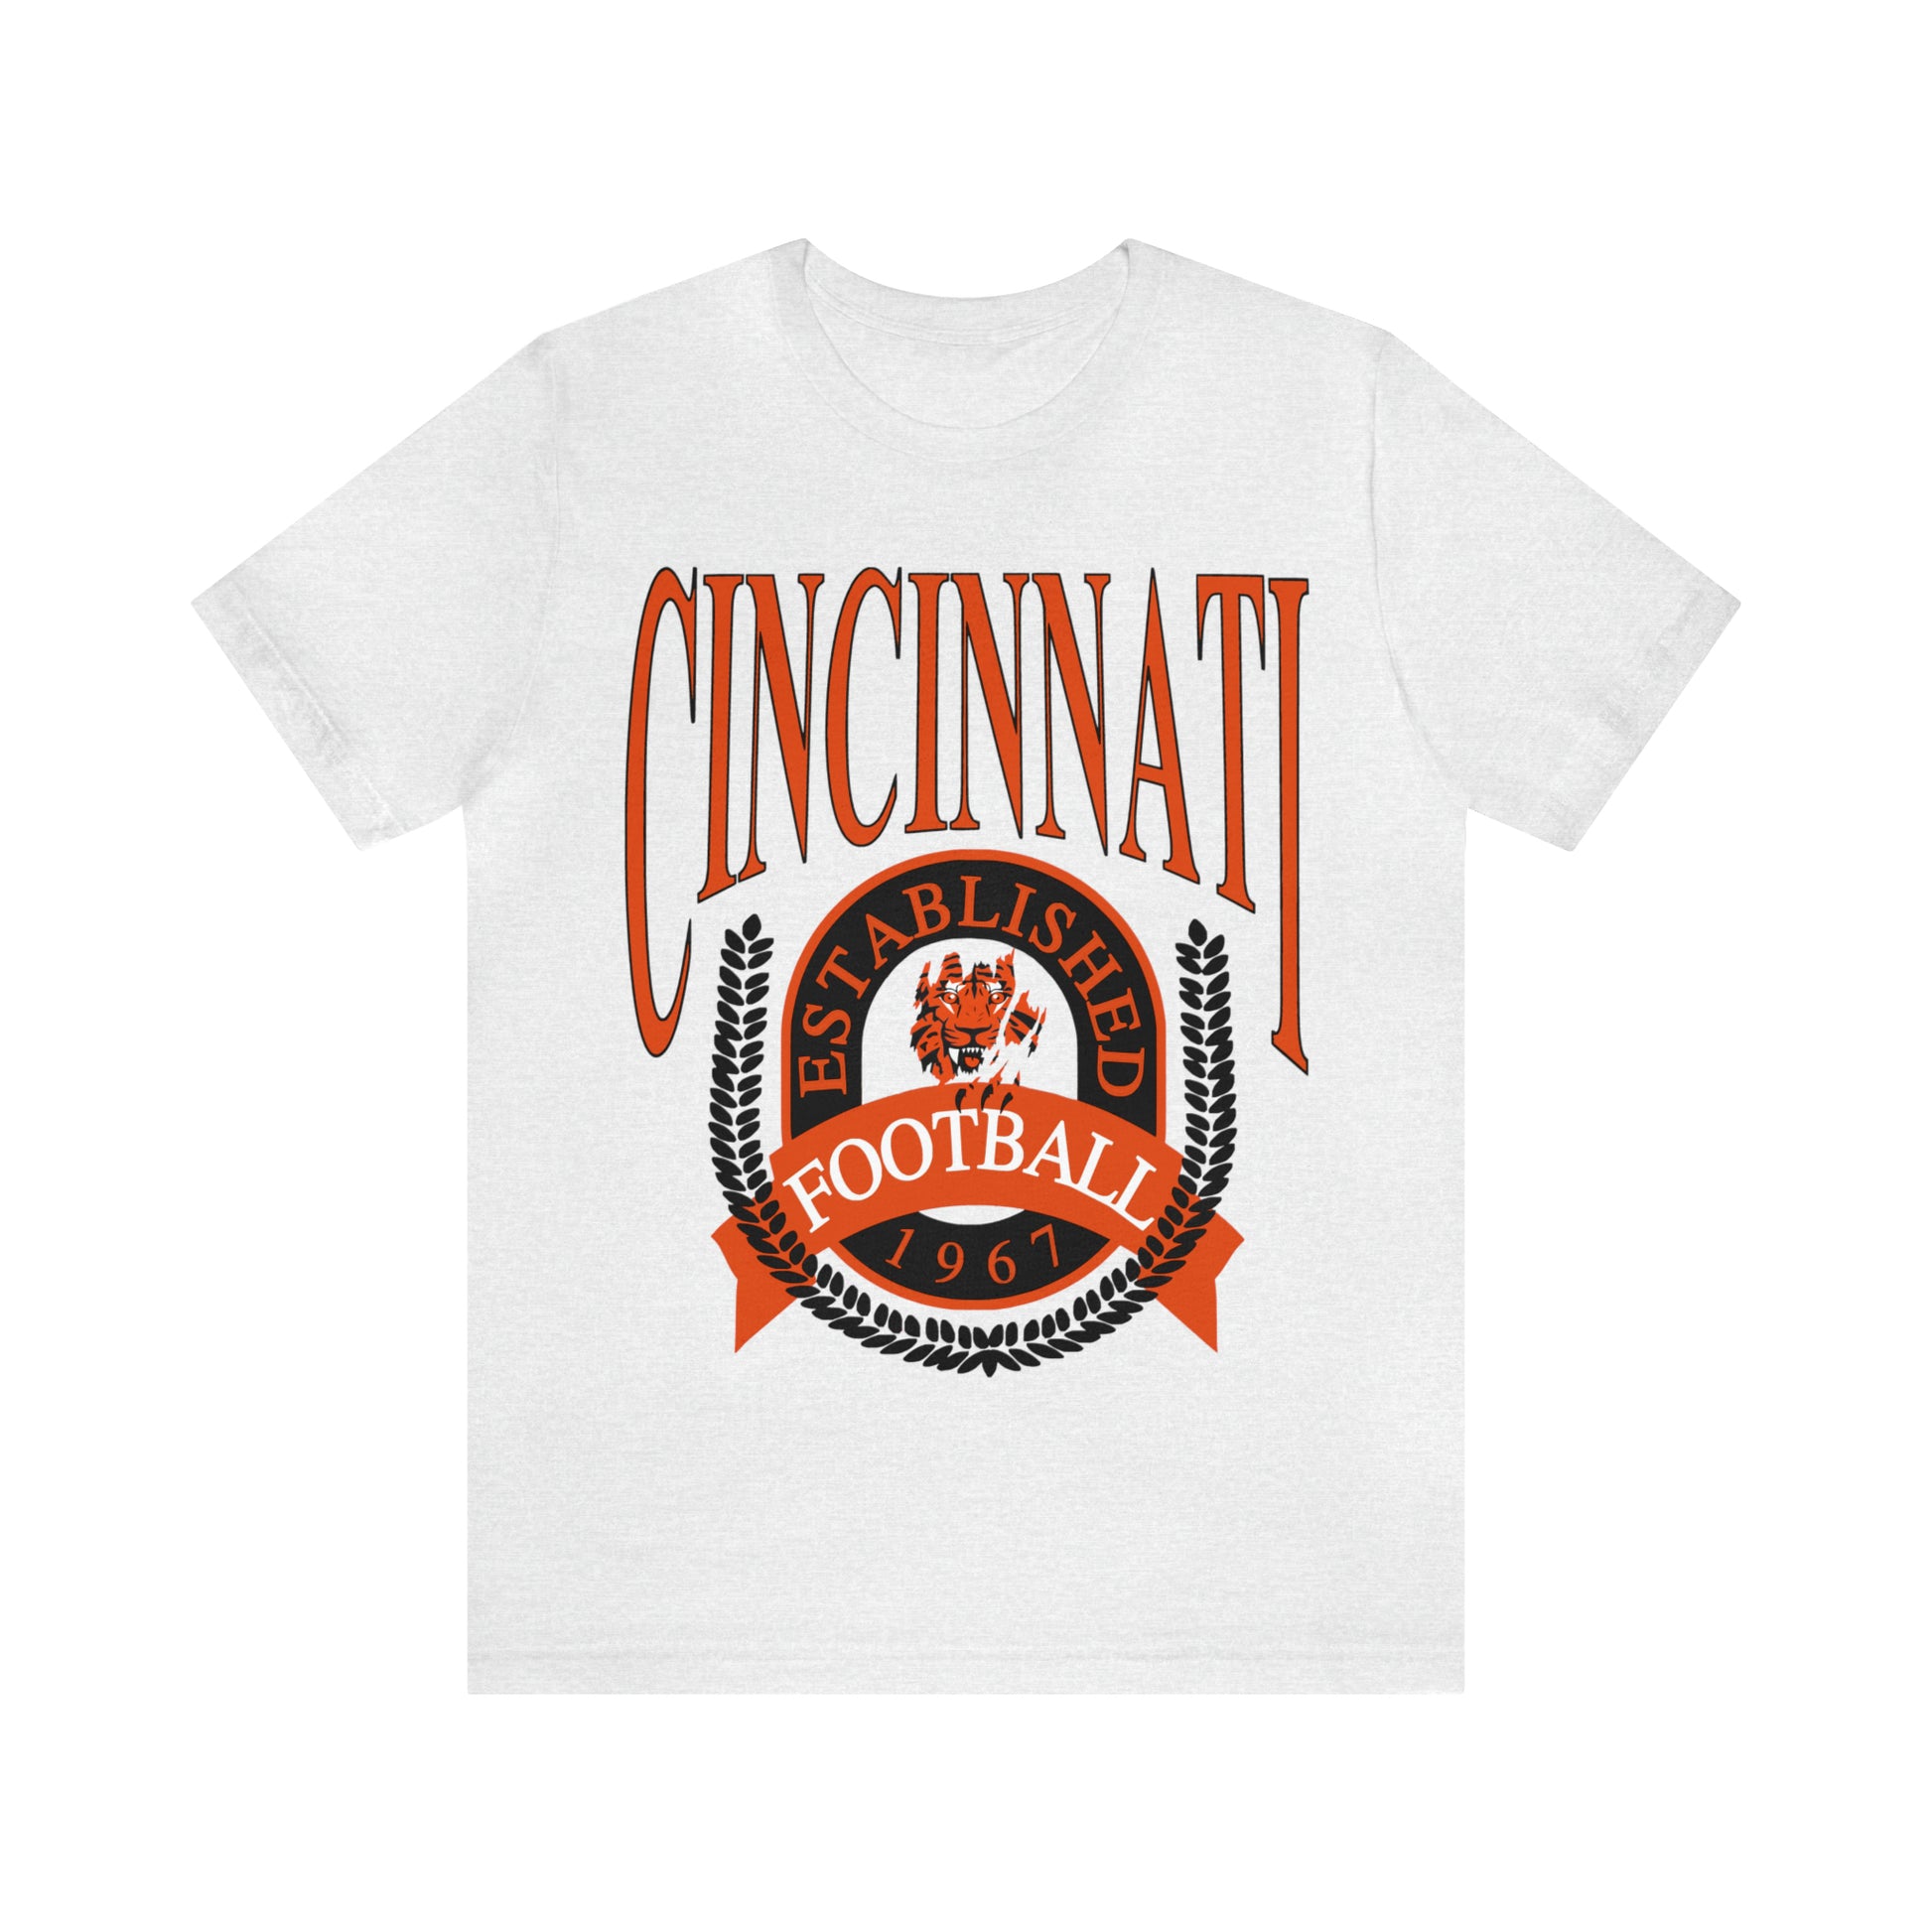 Cincinnati Bengals T-Shirt - Vintage Short Sleeve Bengals Tee - NFL Football Oversized Unisex, Men's & Women's Apparel - Design 1 Light Gray